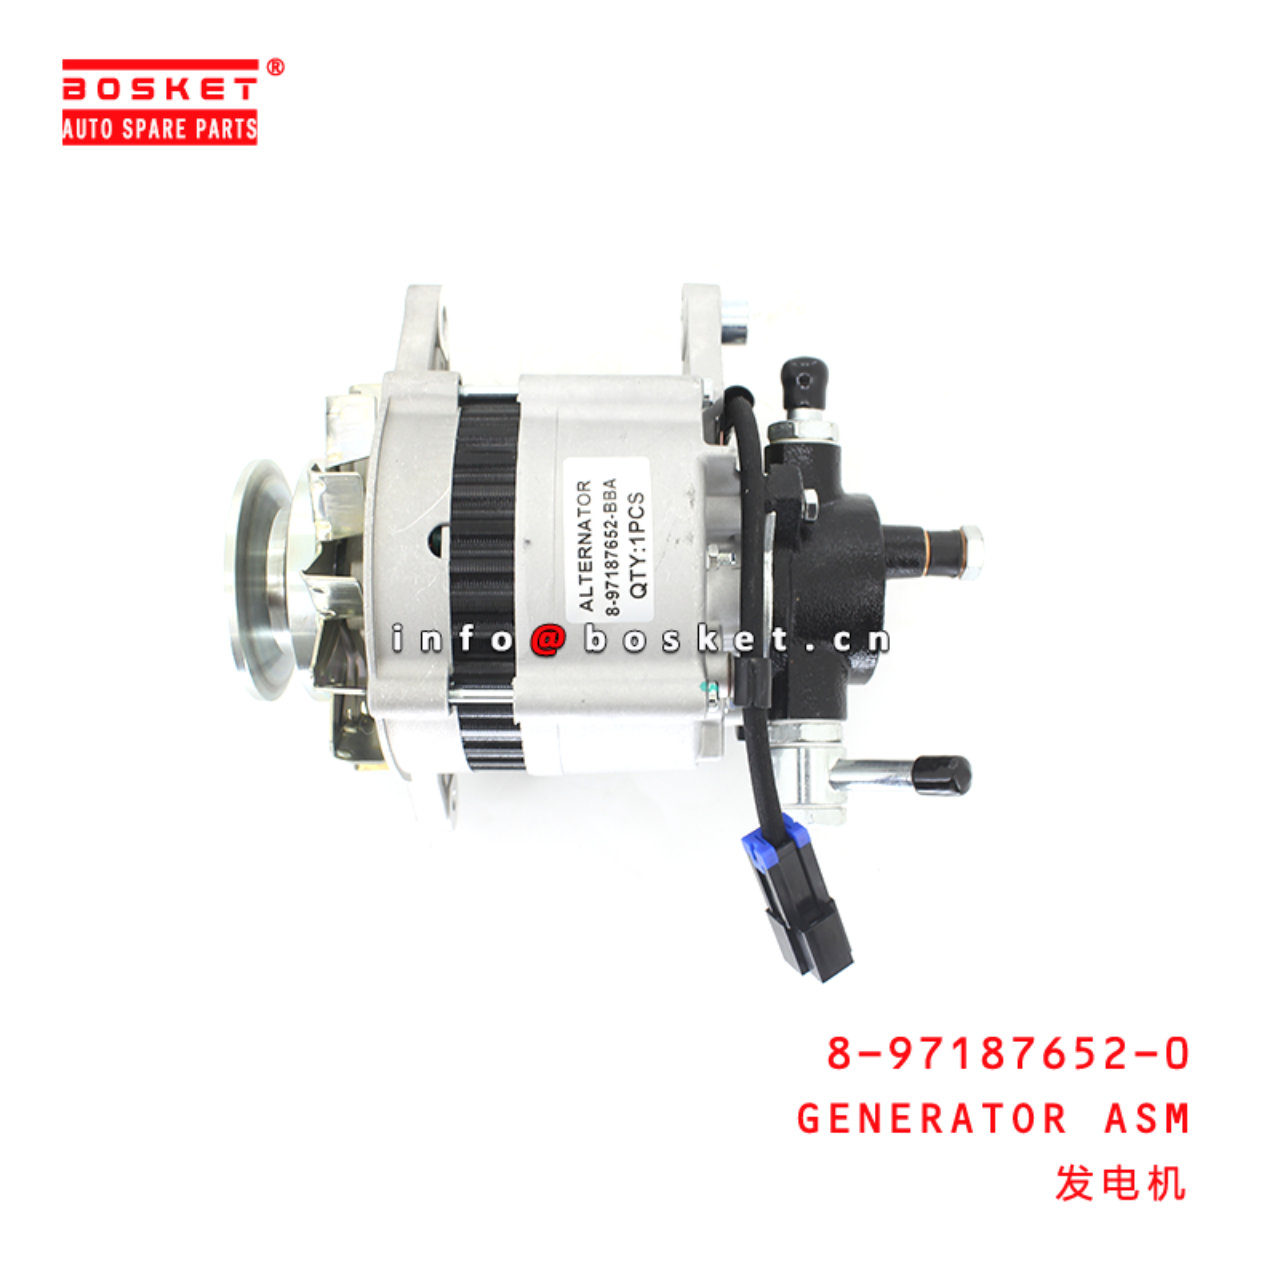 8-97187652-0 Generator Assembly suitable for ISUZU 4JB1 4JA1 